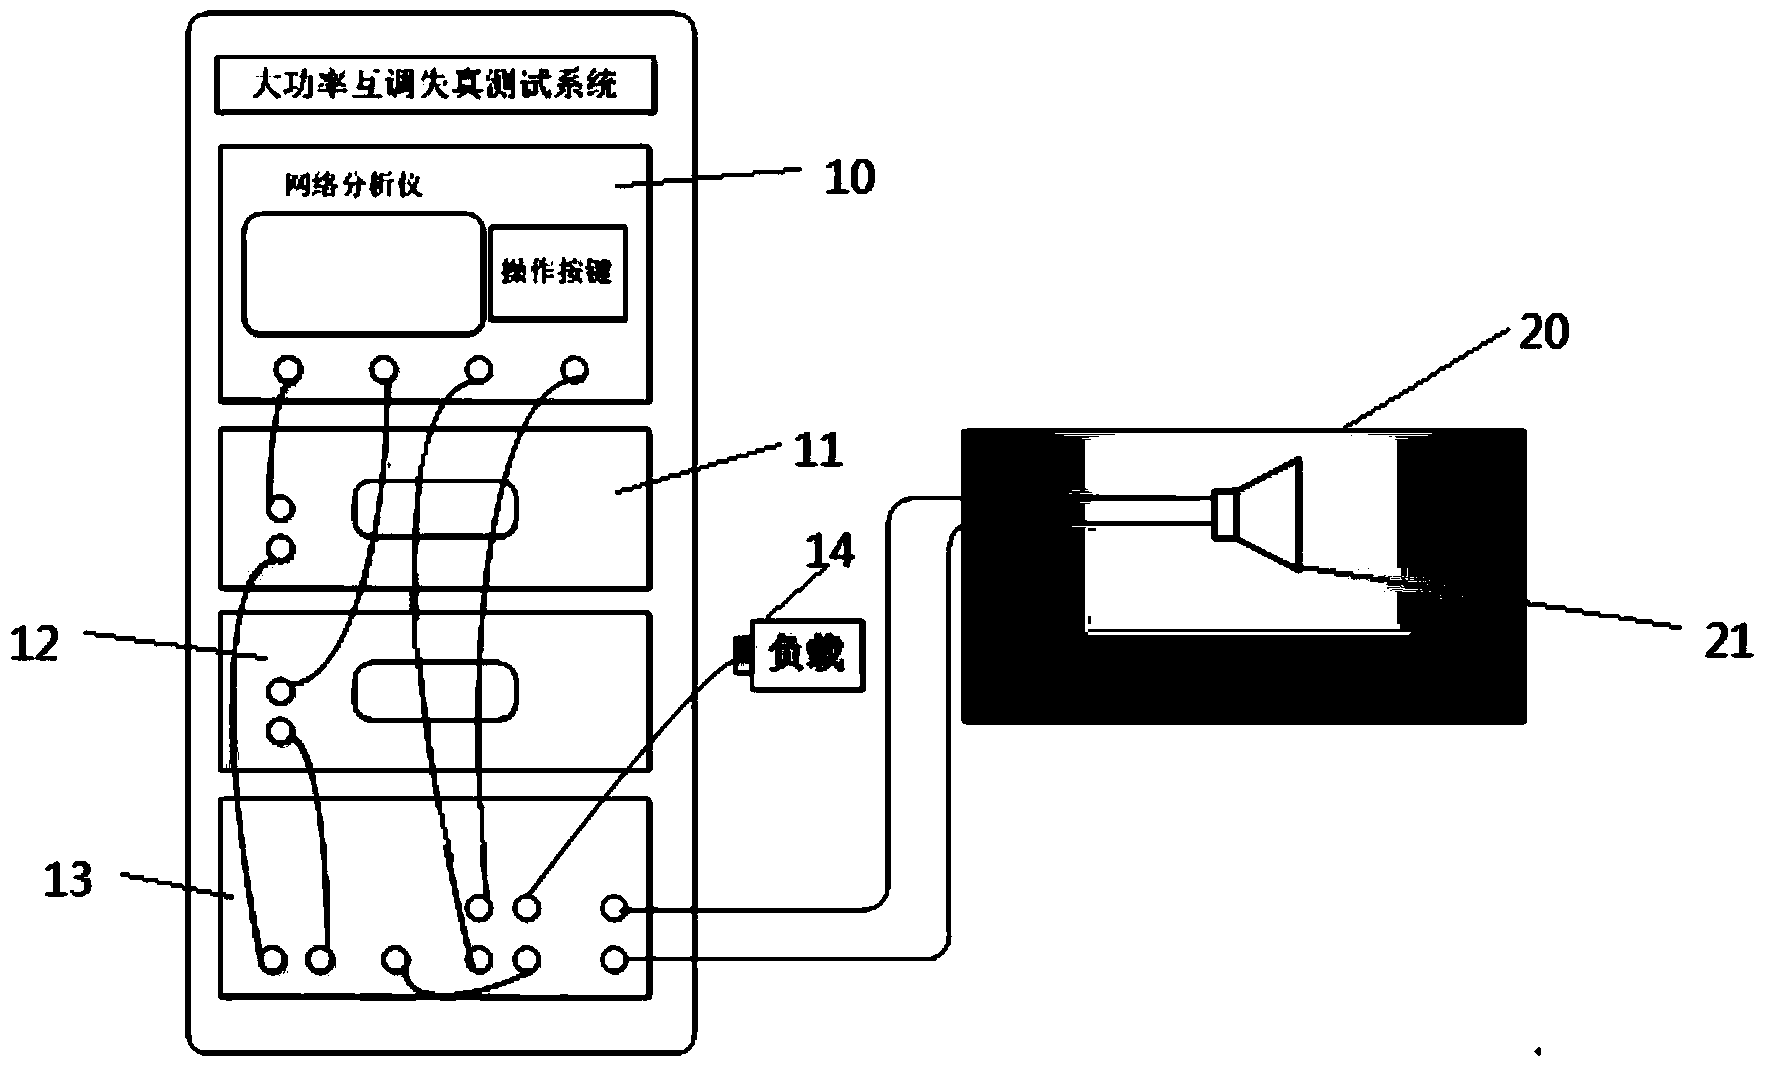 Intermodulation distortion testing method of high-power device